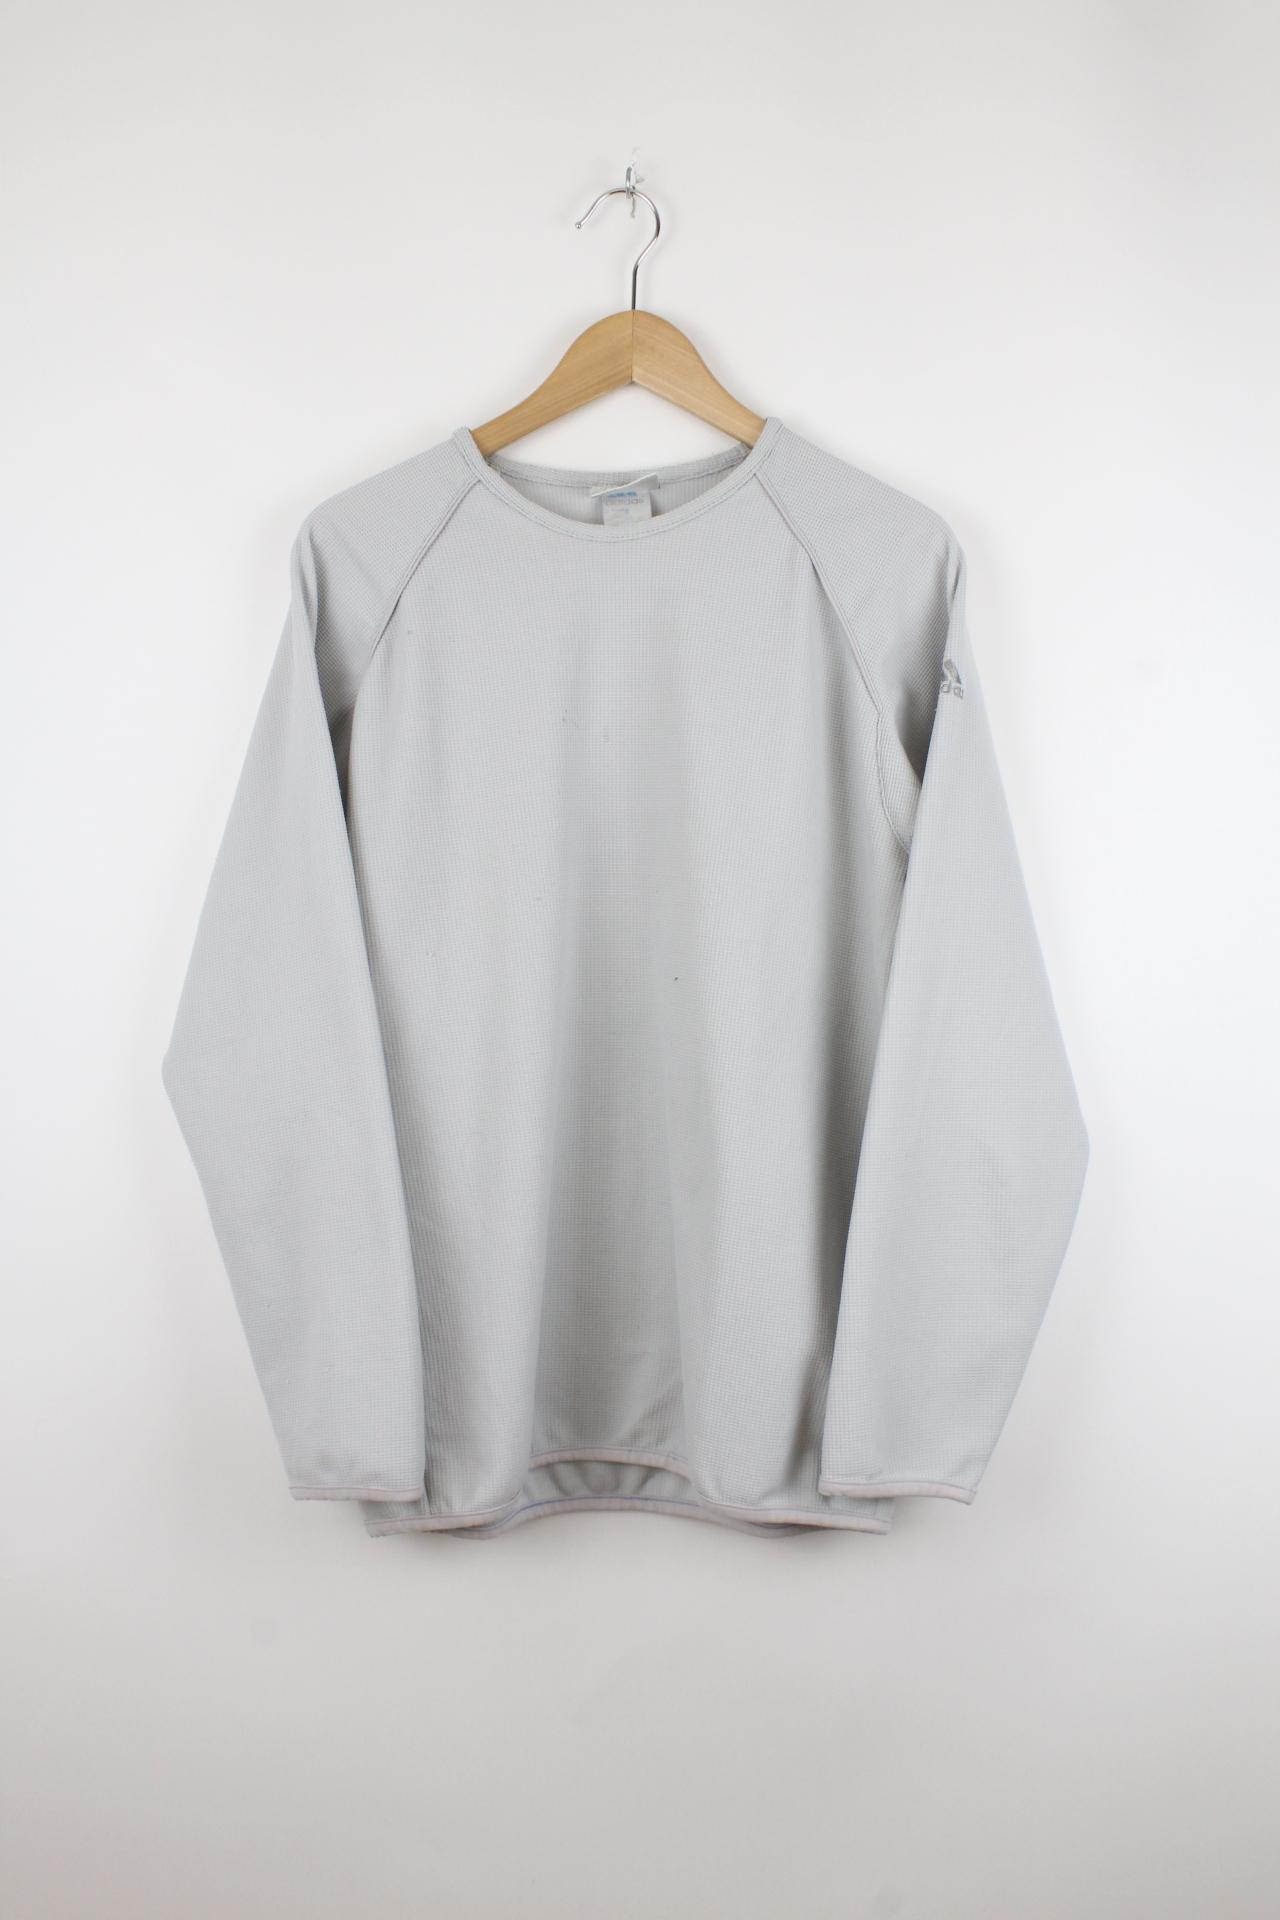 Vintage Adidas Sweater Grau - L